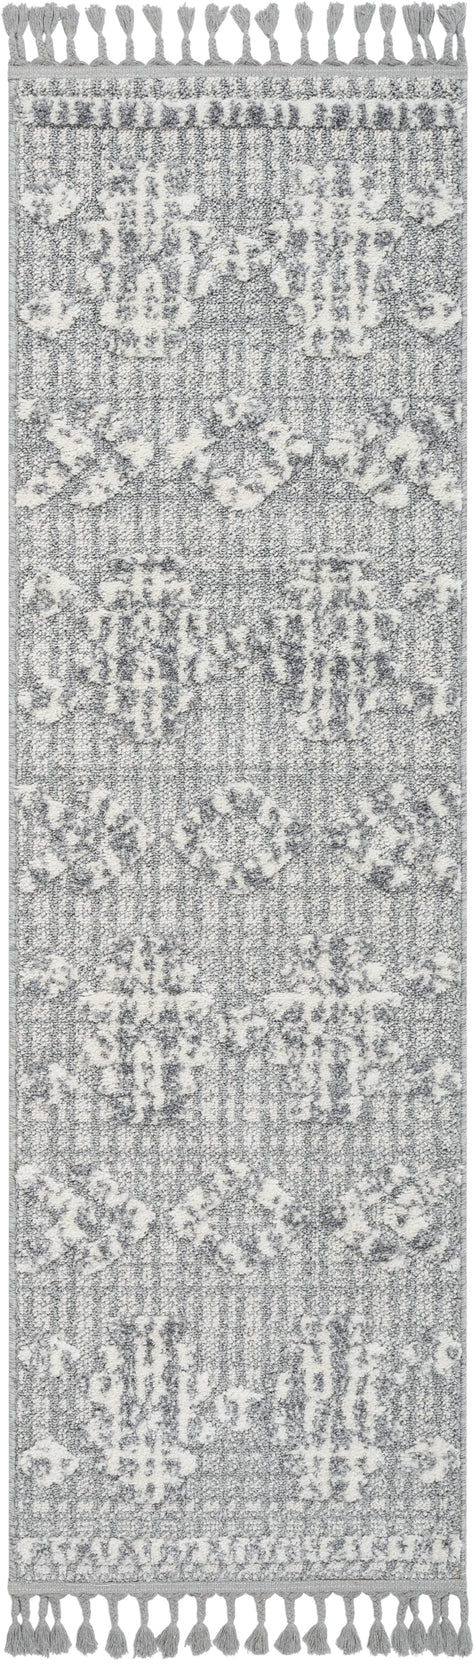 Savannah Tribal Geometric Pattern Grey High-Low Textured Rug